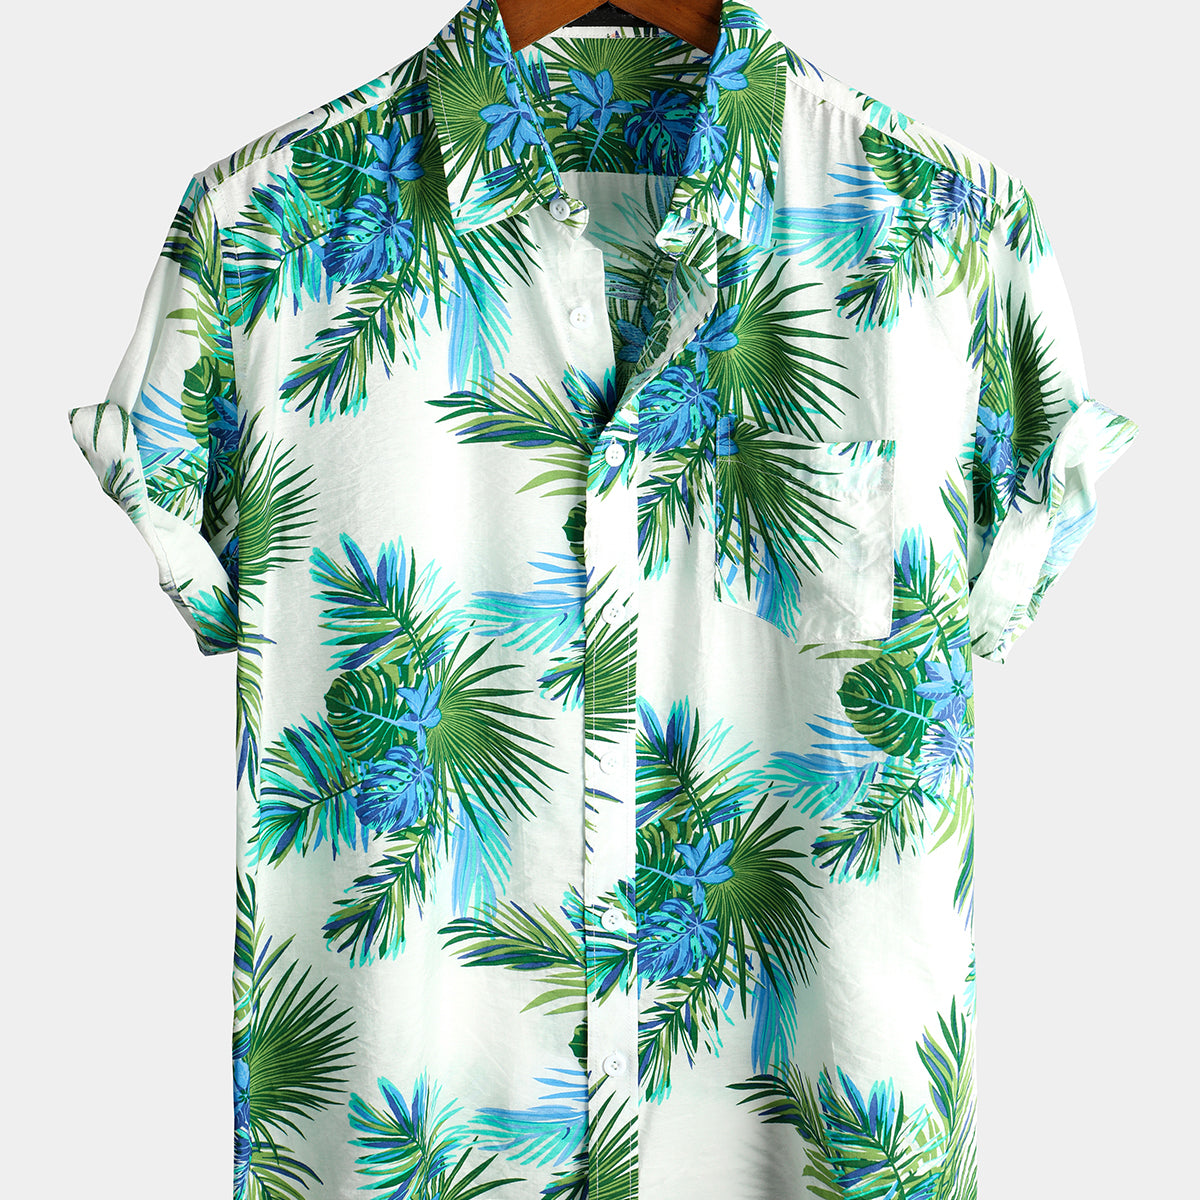 Men's Floral Print Tropical Holiday Cotton Shirt